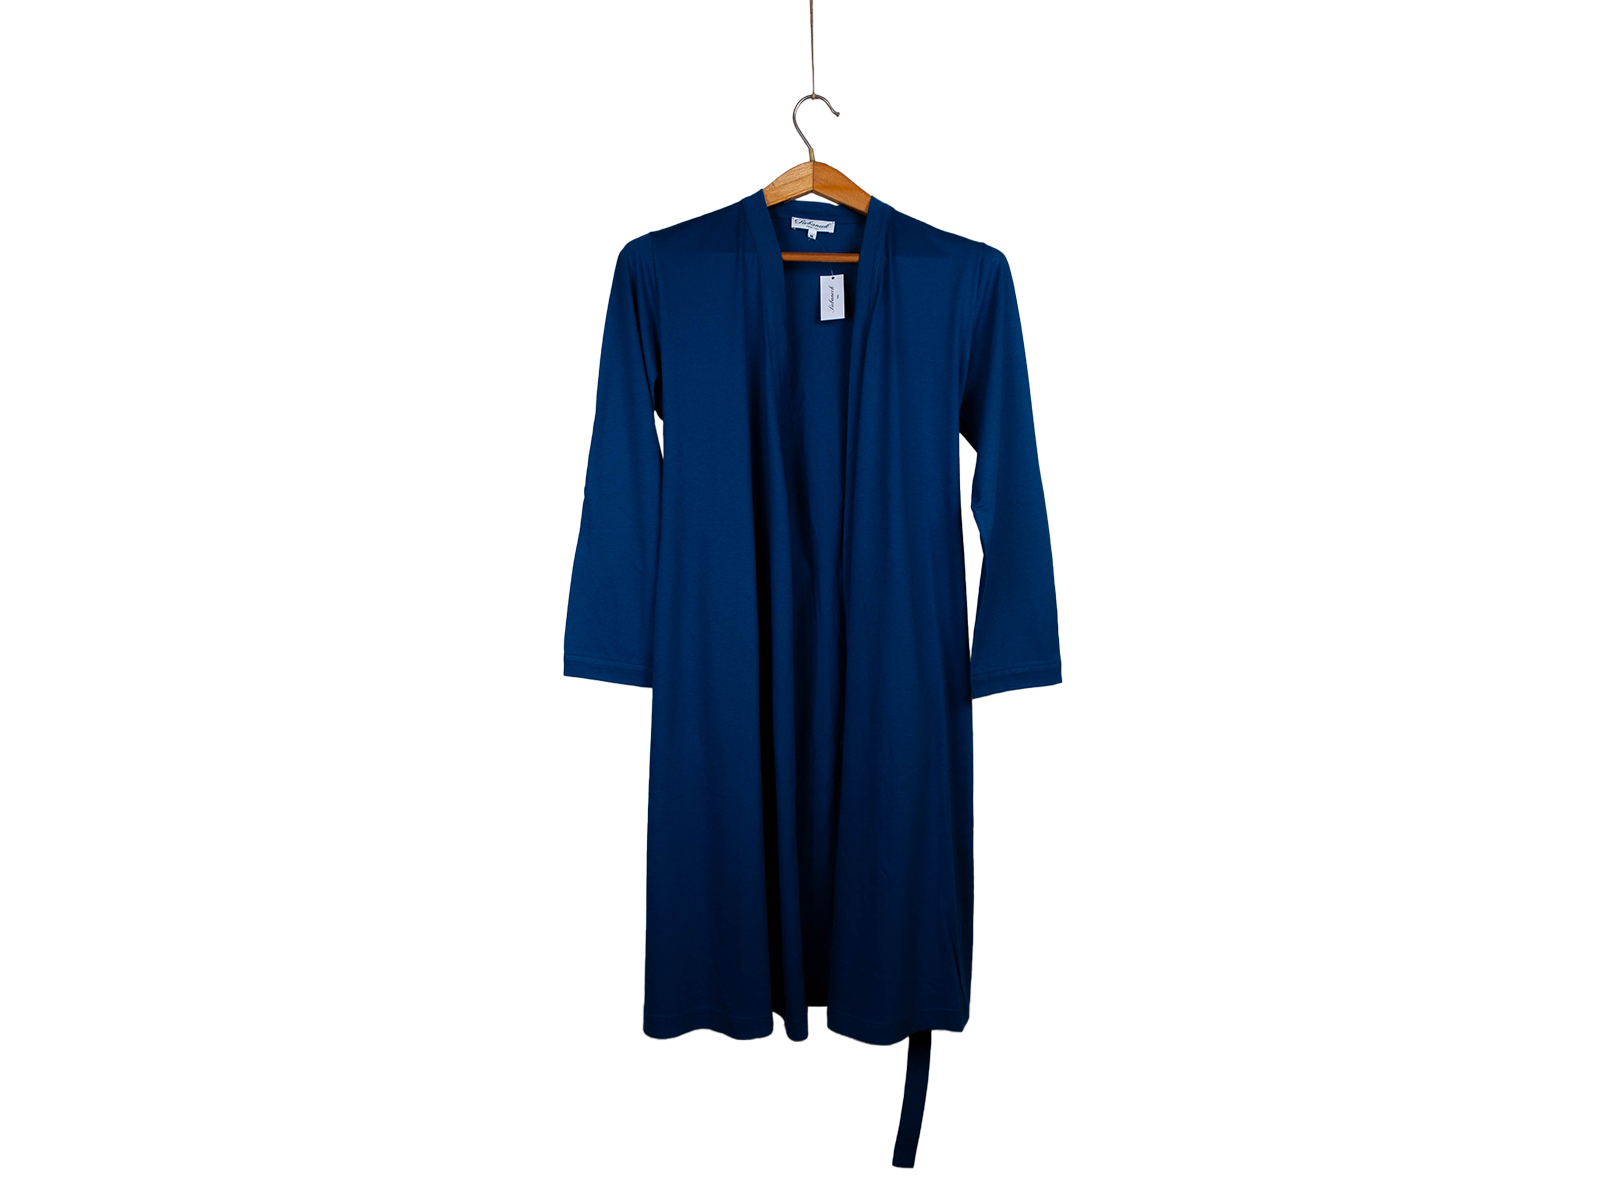 Siebaneck, i pigiami artigianali italiani: - donna - mod. 131 bluette